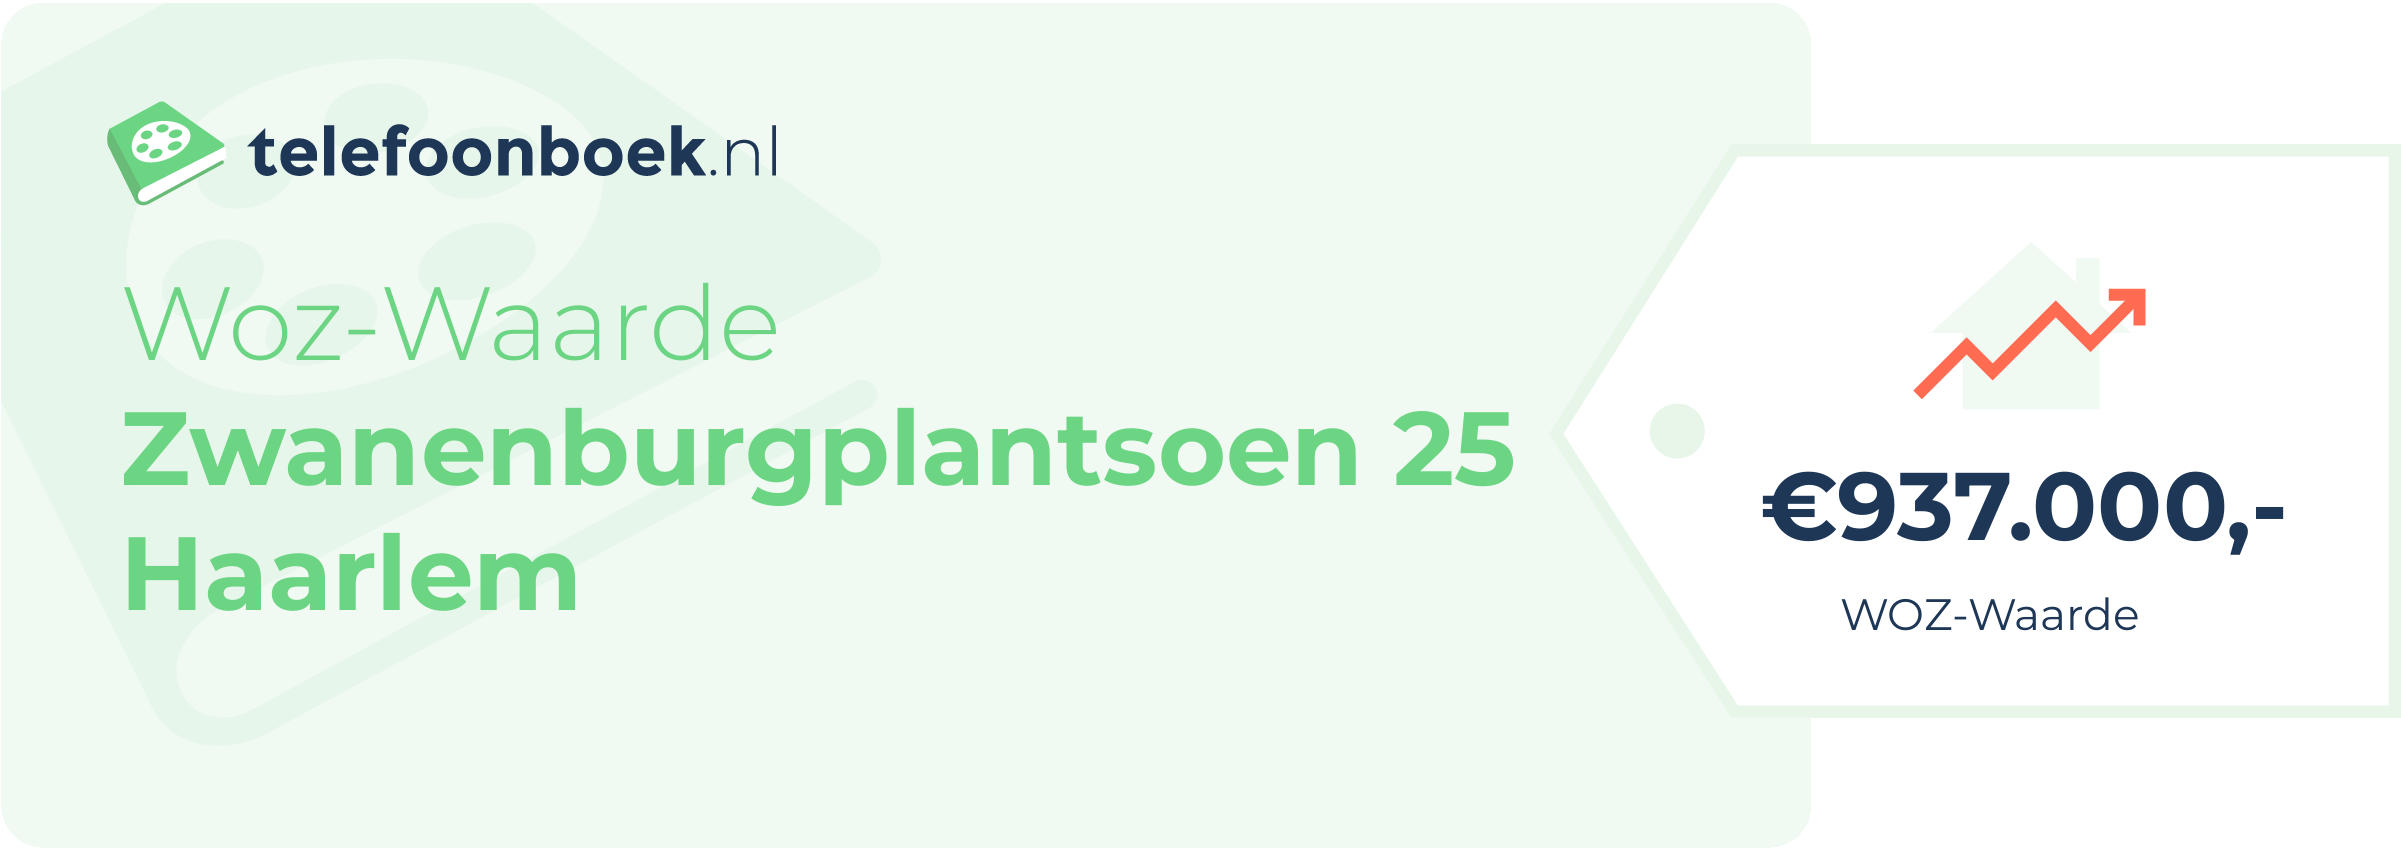 WOZ-waarde Zwanenburgplantsoen 25 Haarlem